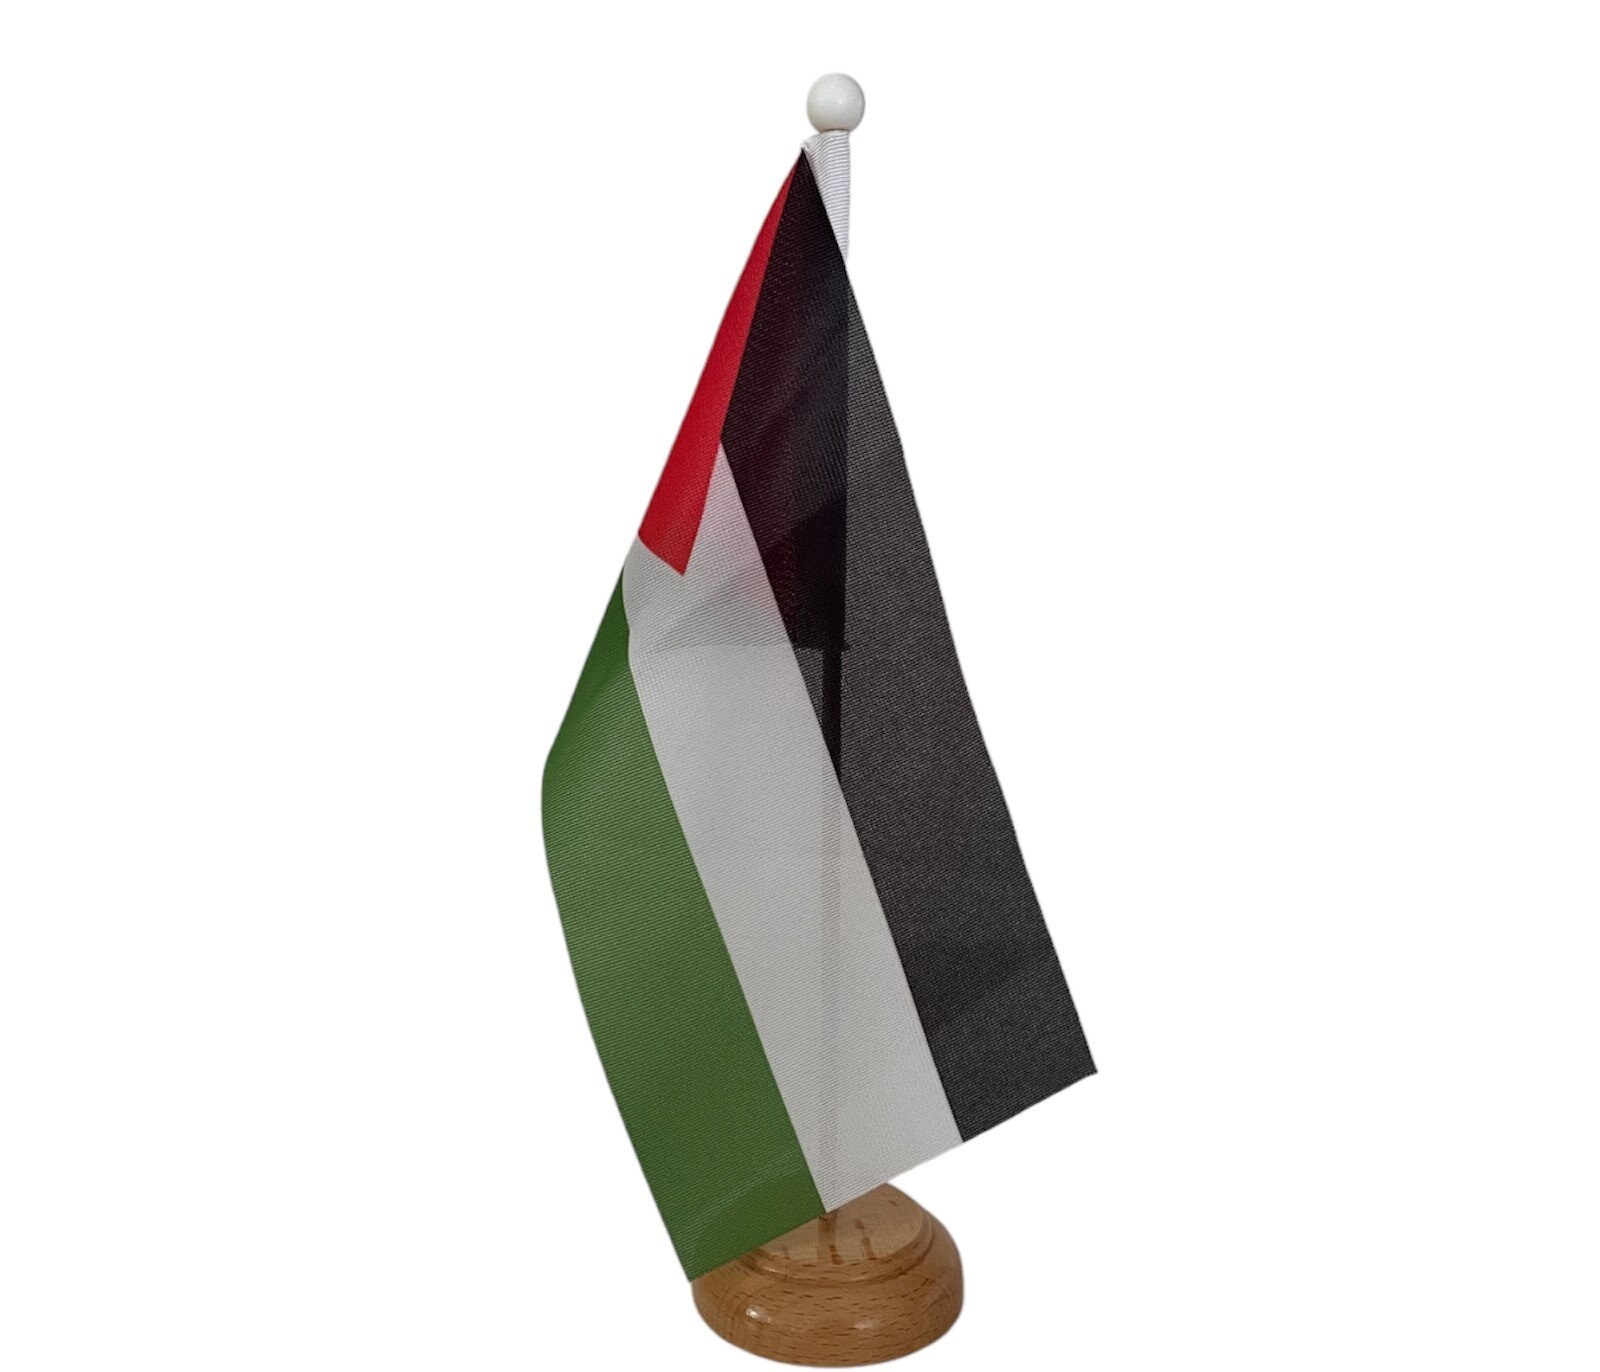 PALESTINE FLAG GAZA Palestinian Freedom^90*150CM Large Flags Fist